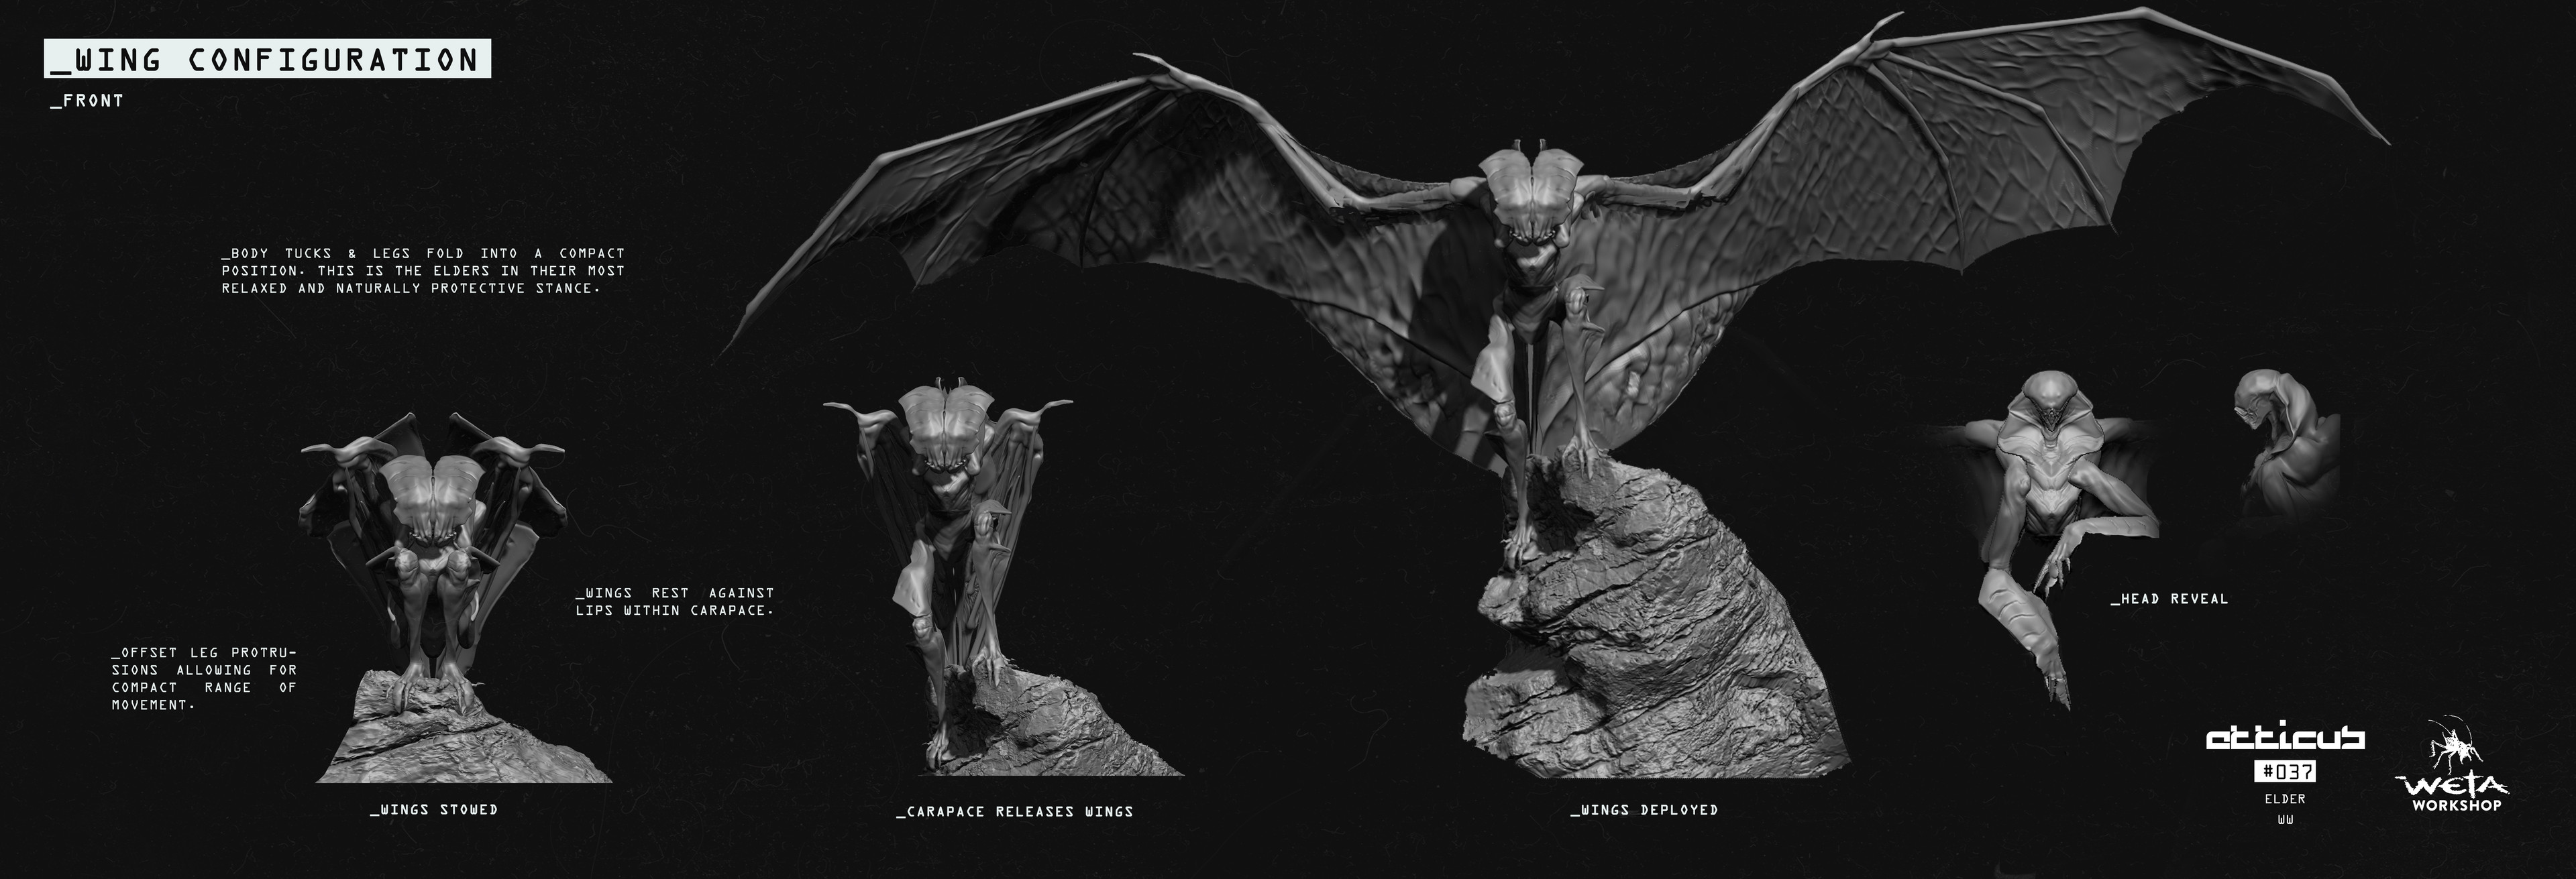 Elder Wing Configuration - Artists: Dane Madgwick + Russel Dongjun Lu + Greg Tozer